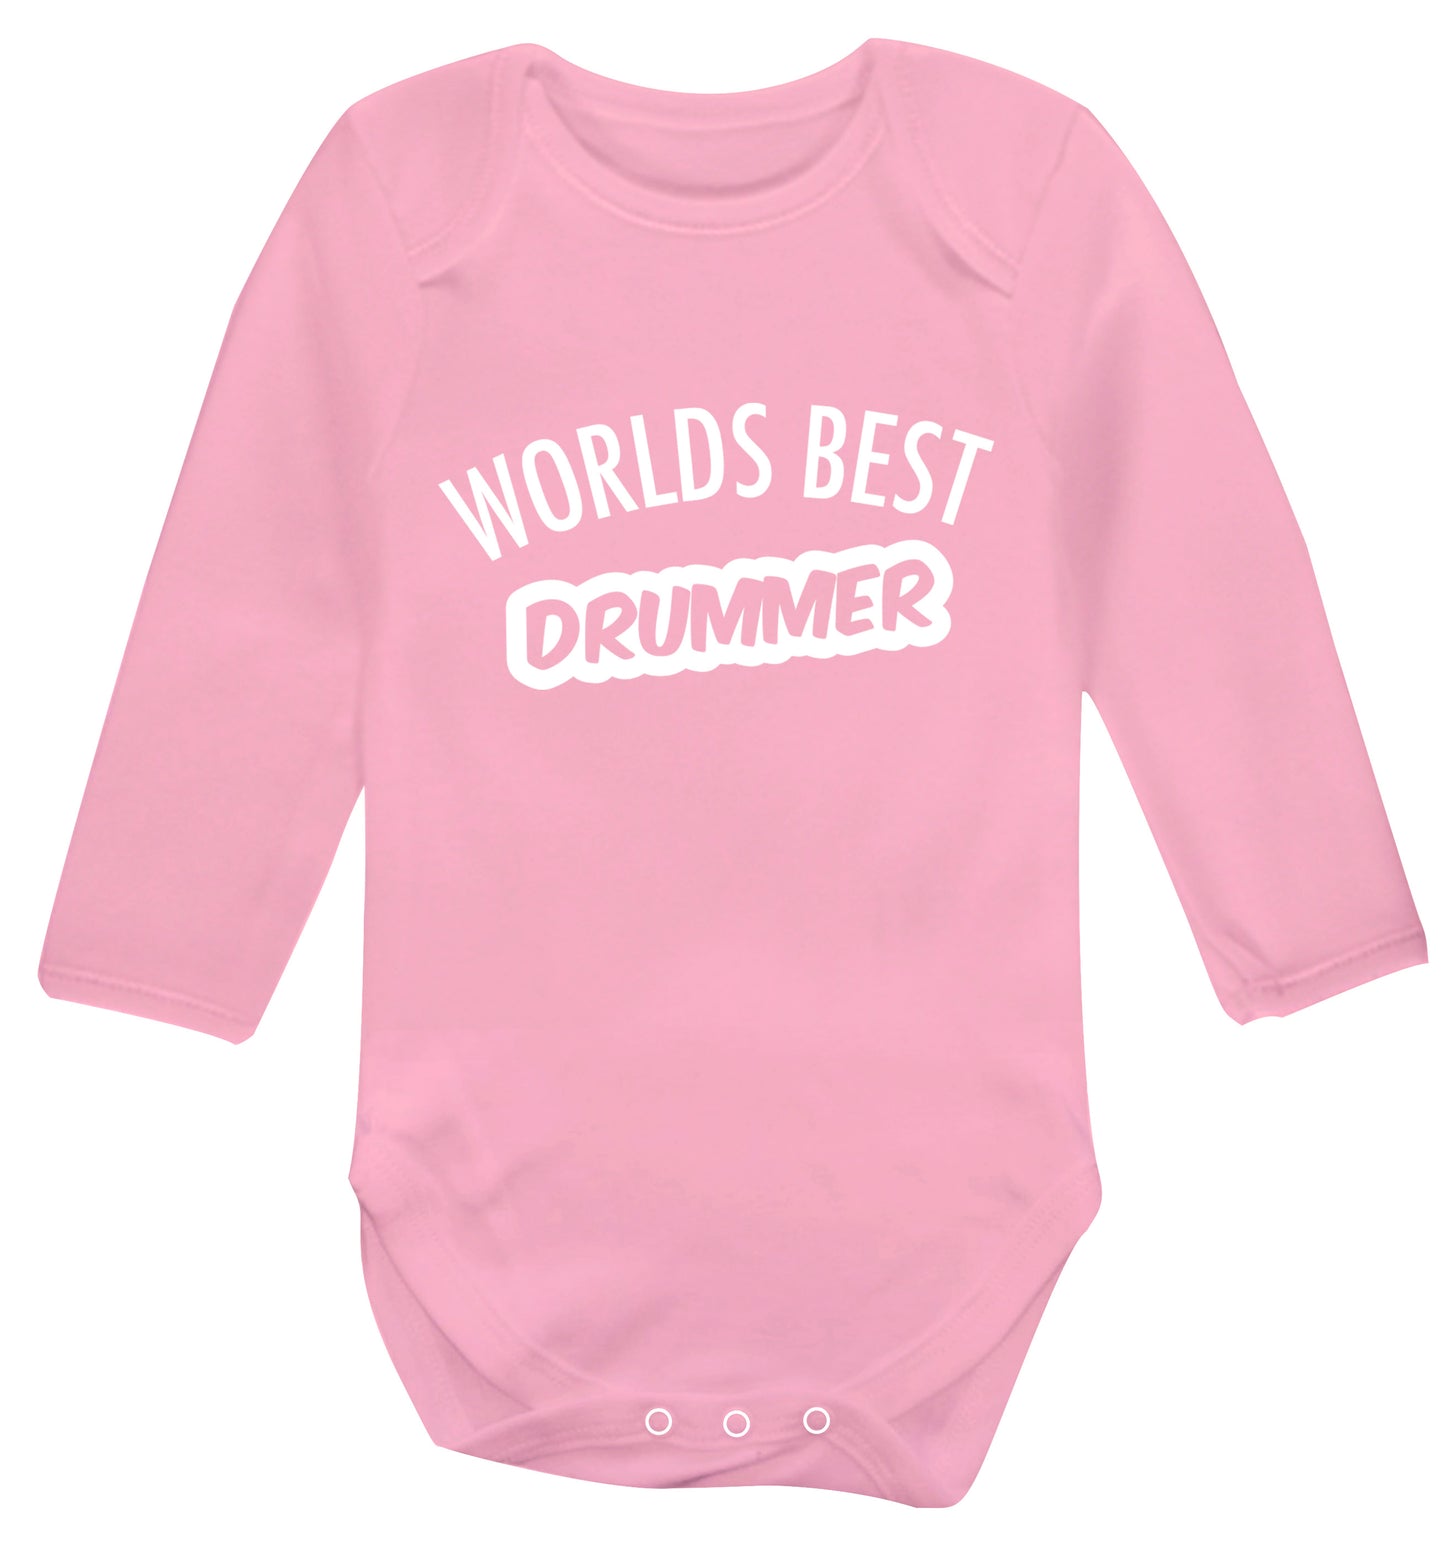 Worlds best drummer Baby Vest long sleeved pale pink 6-12 months